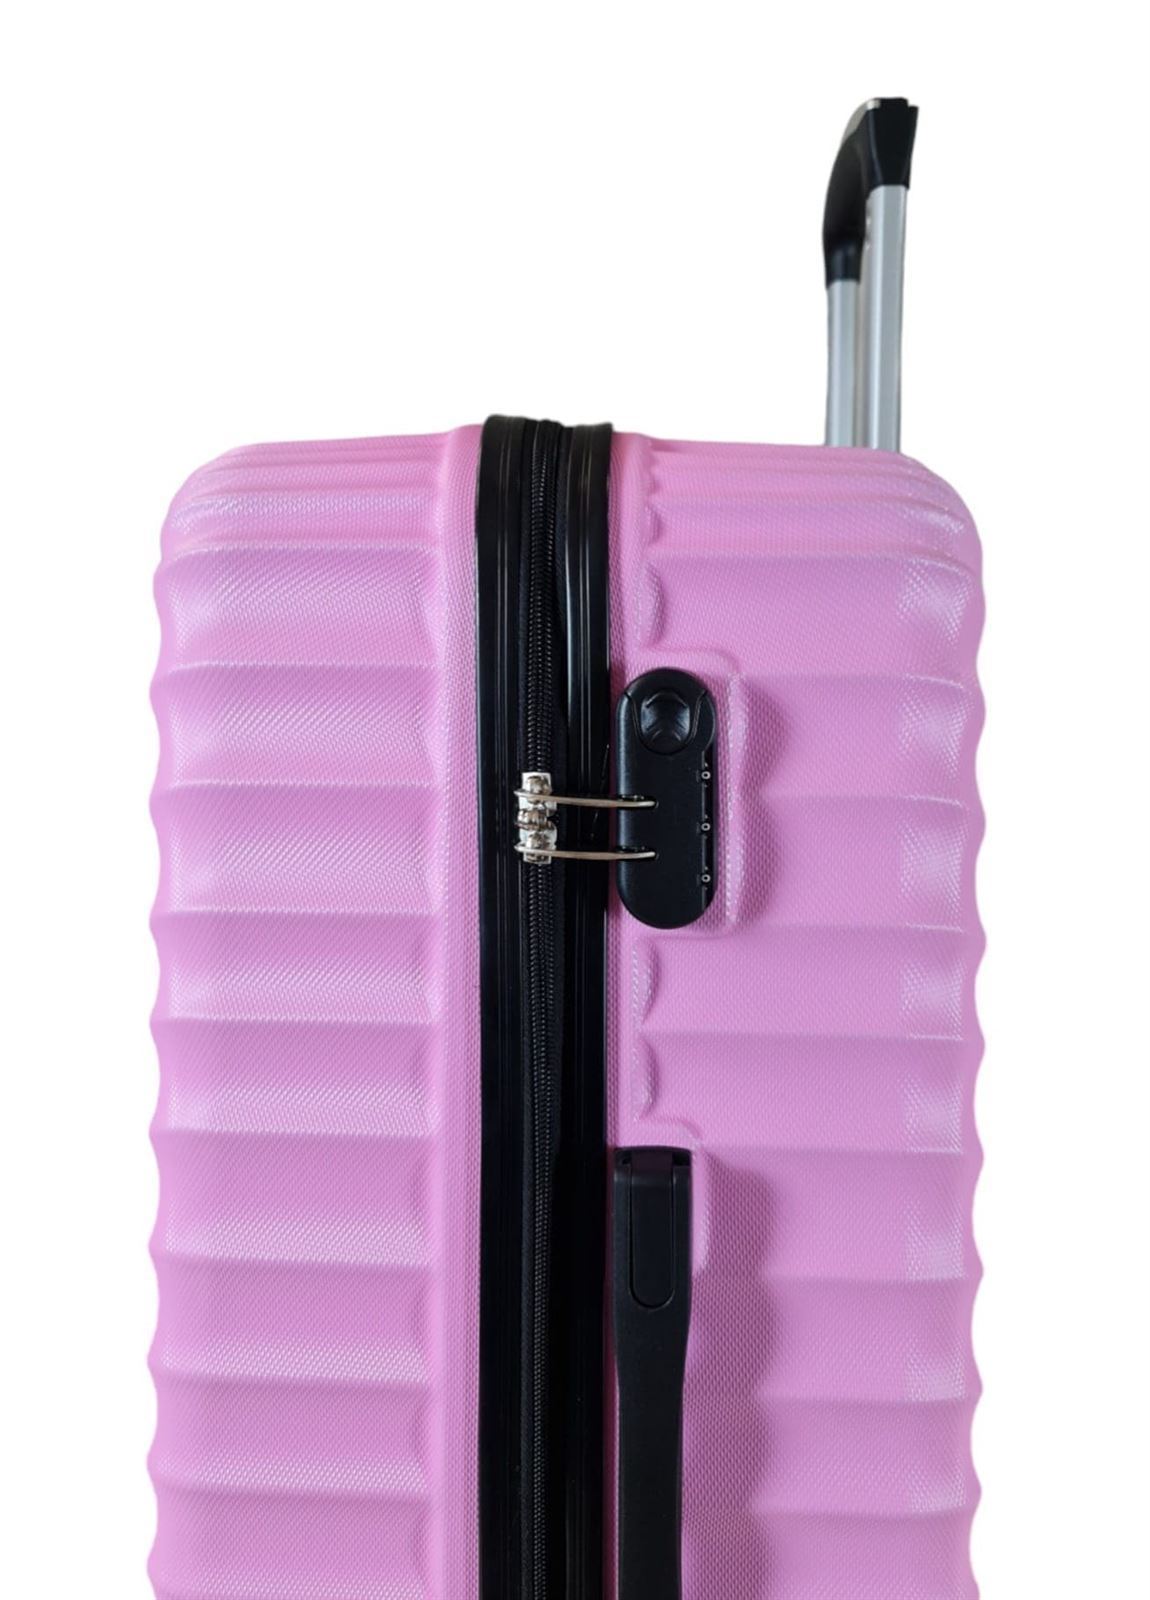 Maleta VIP Grande 75x46x30 cms Muy Ligera Barata Material ABS color Rosa Barbie - Imagen 10